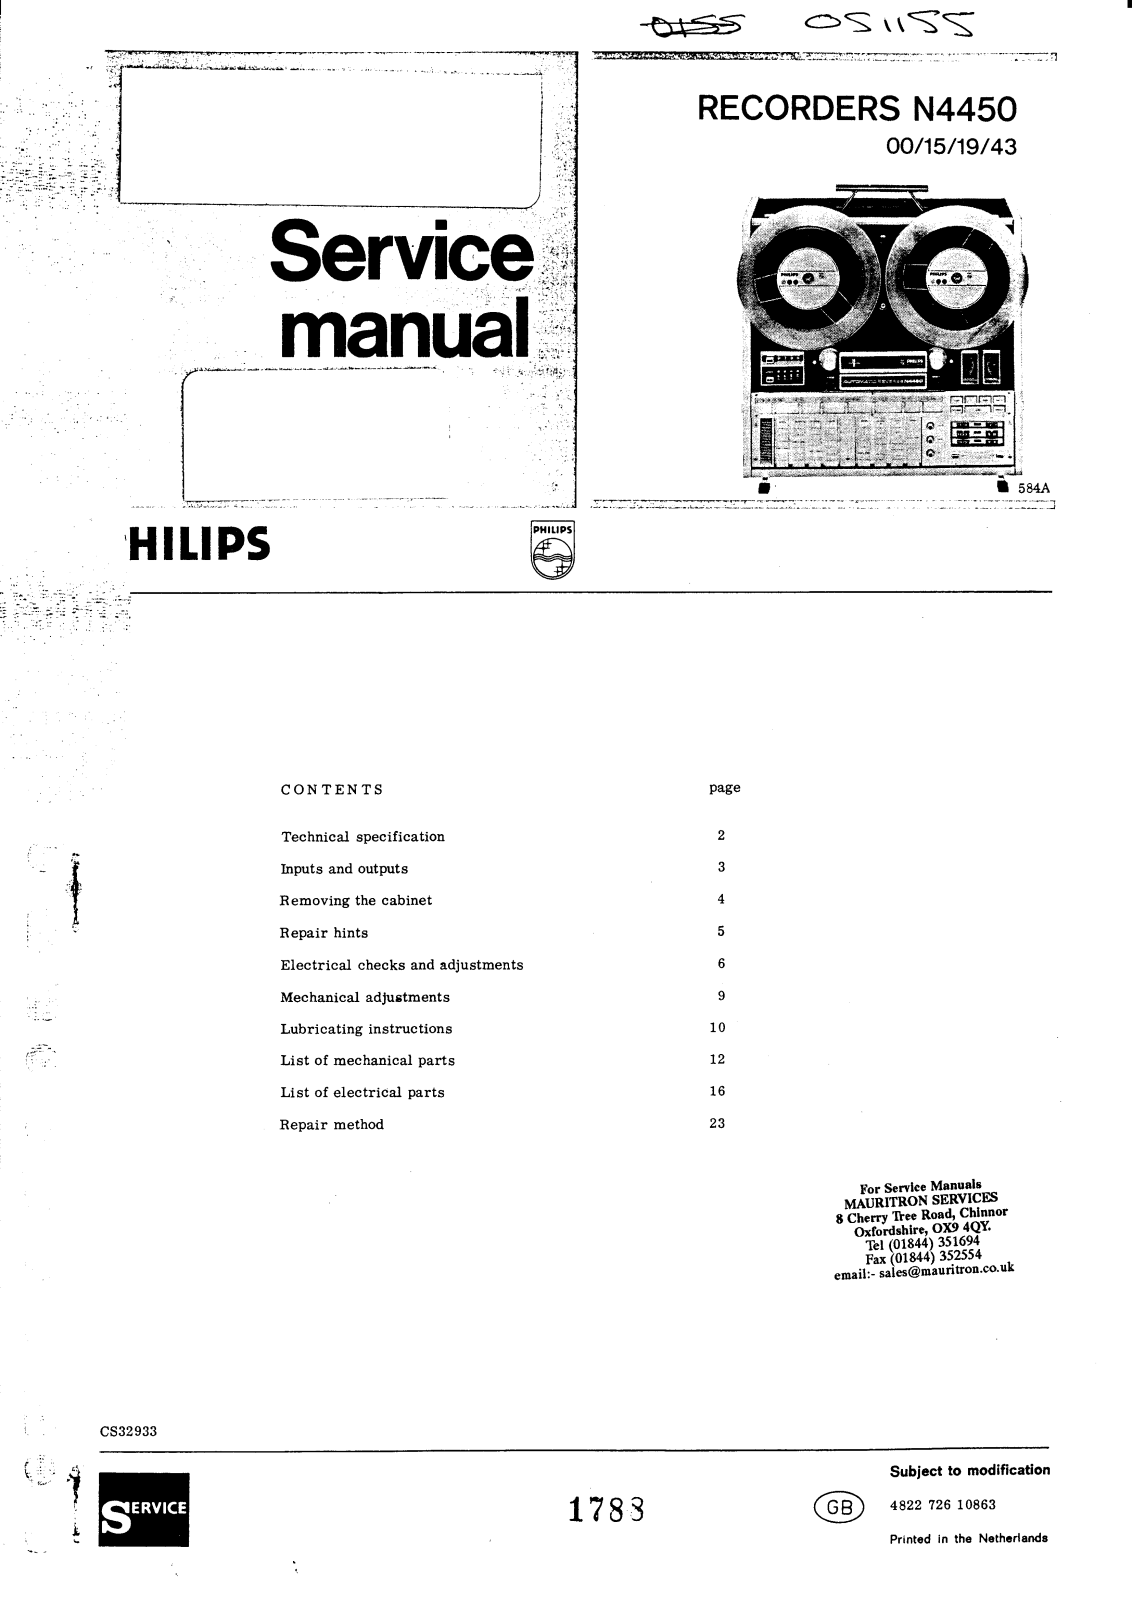 Philips N-4450 Service manual